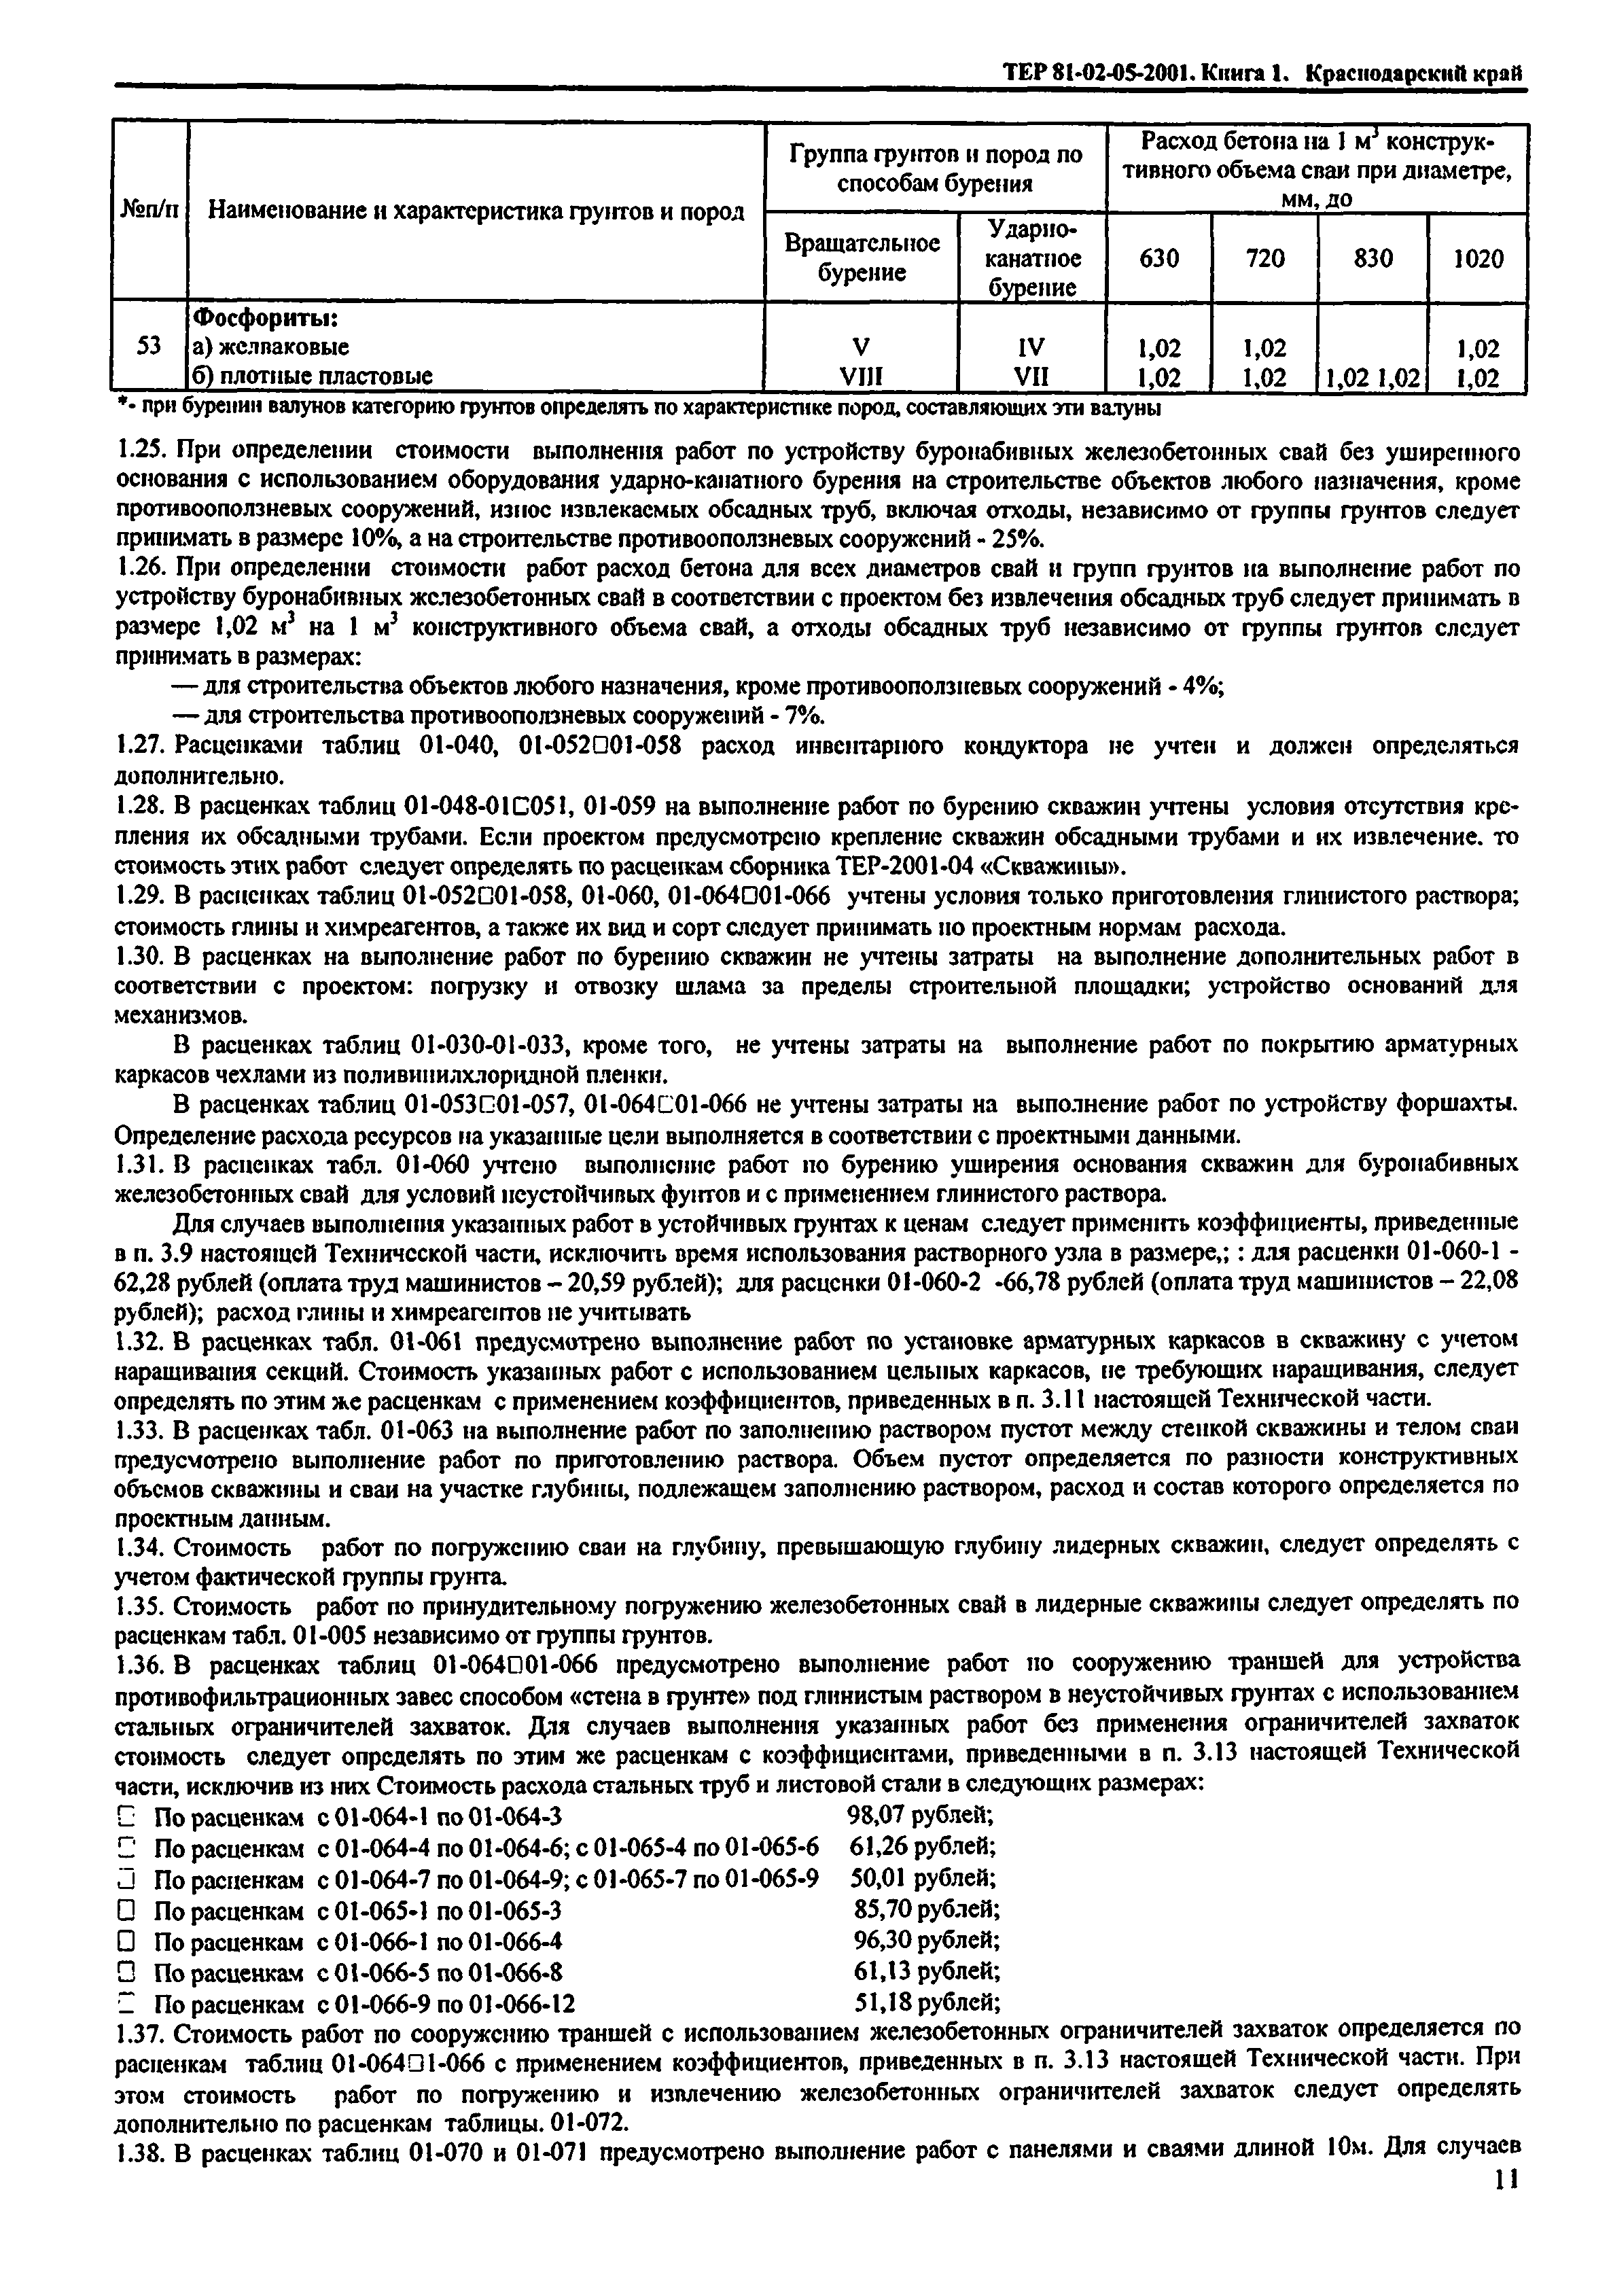 ТЕР Краснодарский край 2001-05